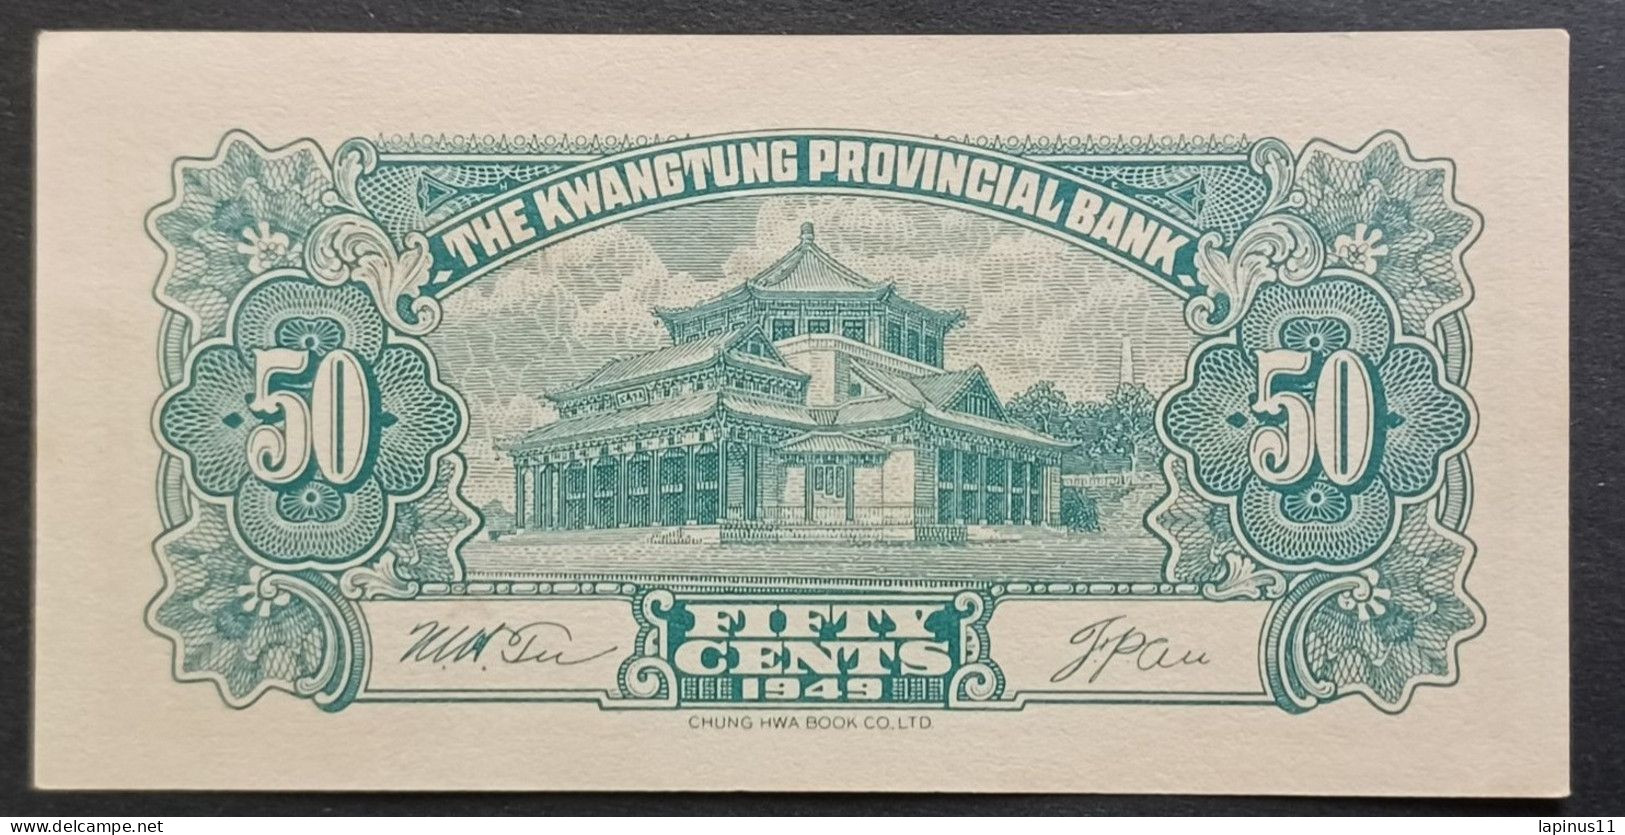 BANKNOTE CHINA KWANGTUNG PROVINCIAL 50 CENT 1949 SERIES A UNCIRCULATED - China